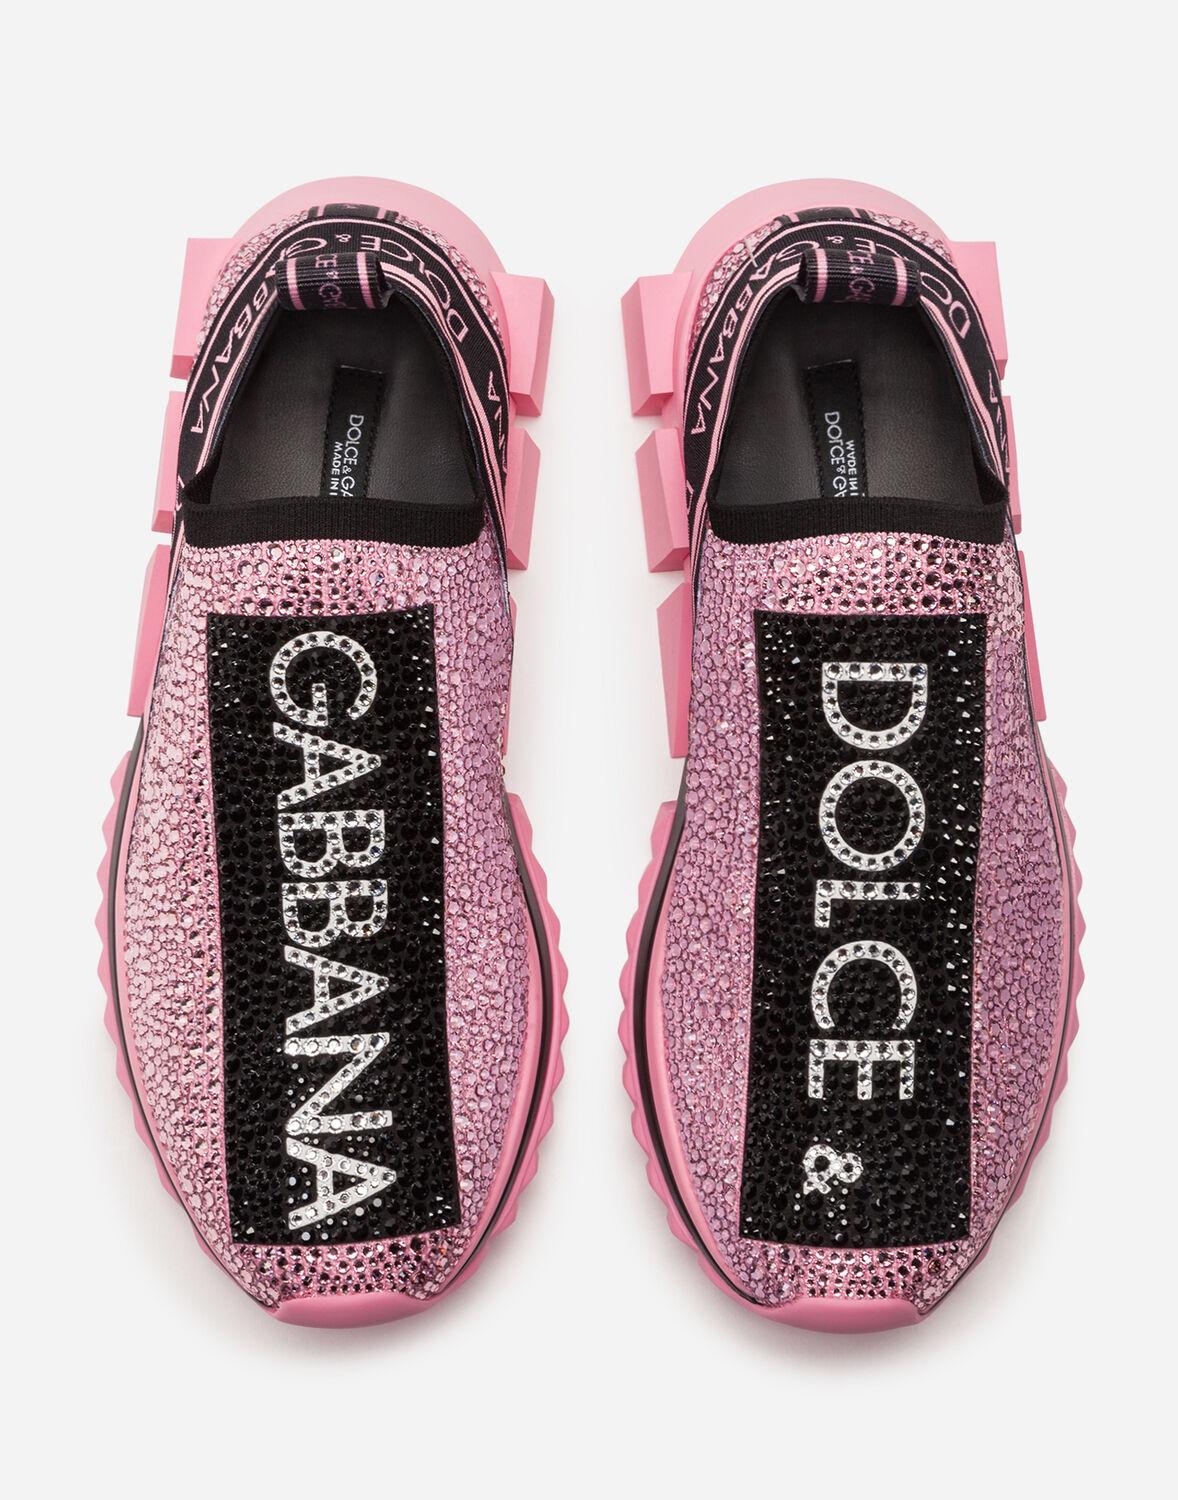 dolce & gabbana shoes pink